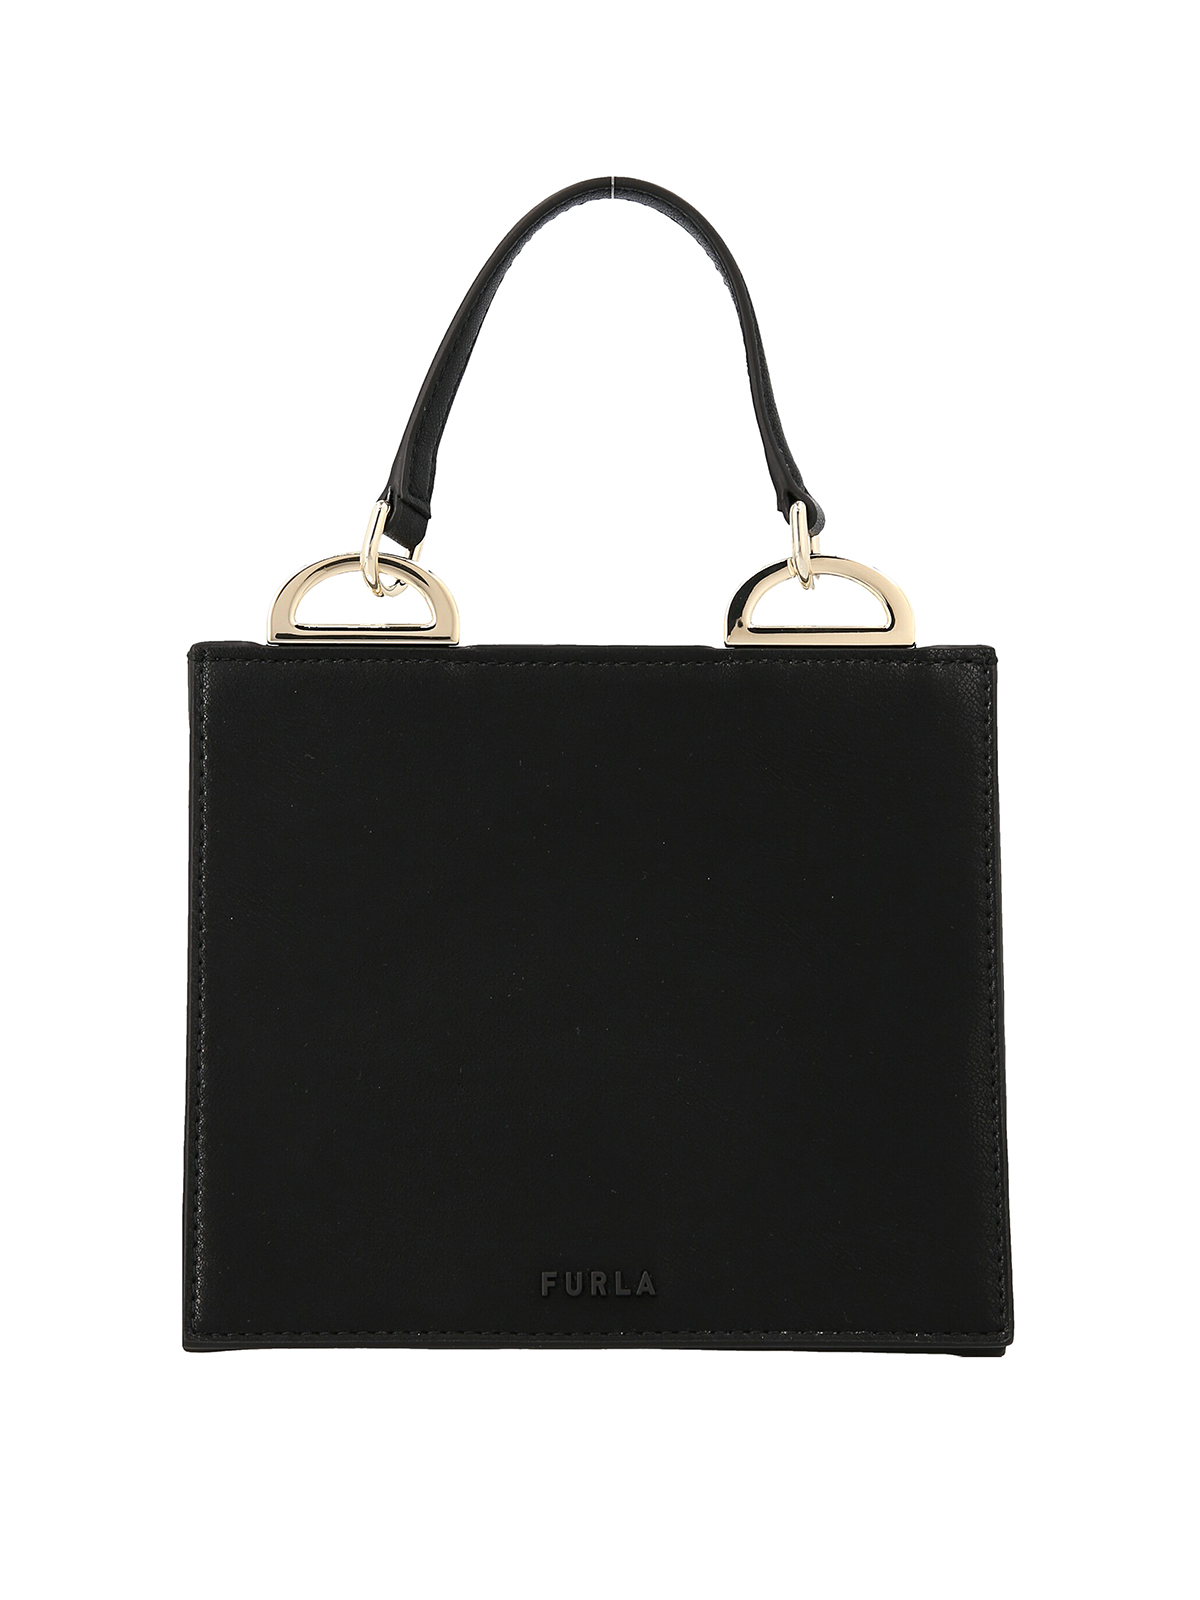 Furla Futura Handbag In Black